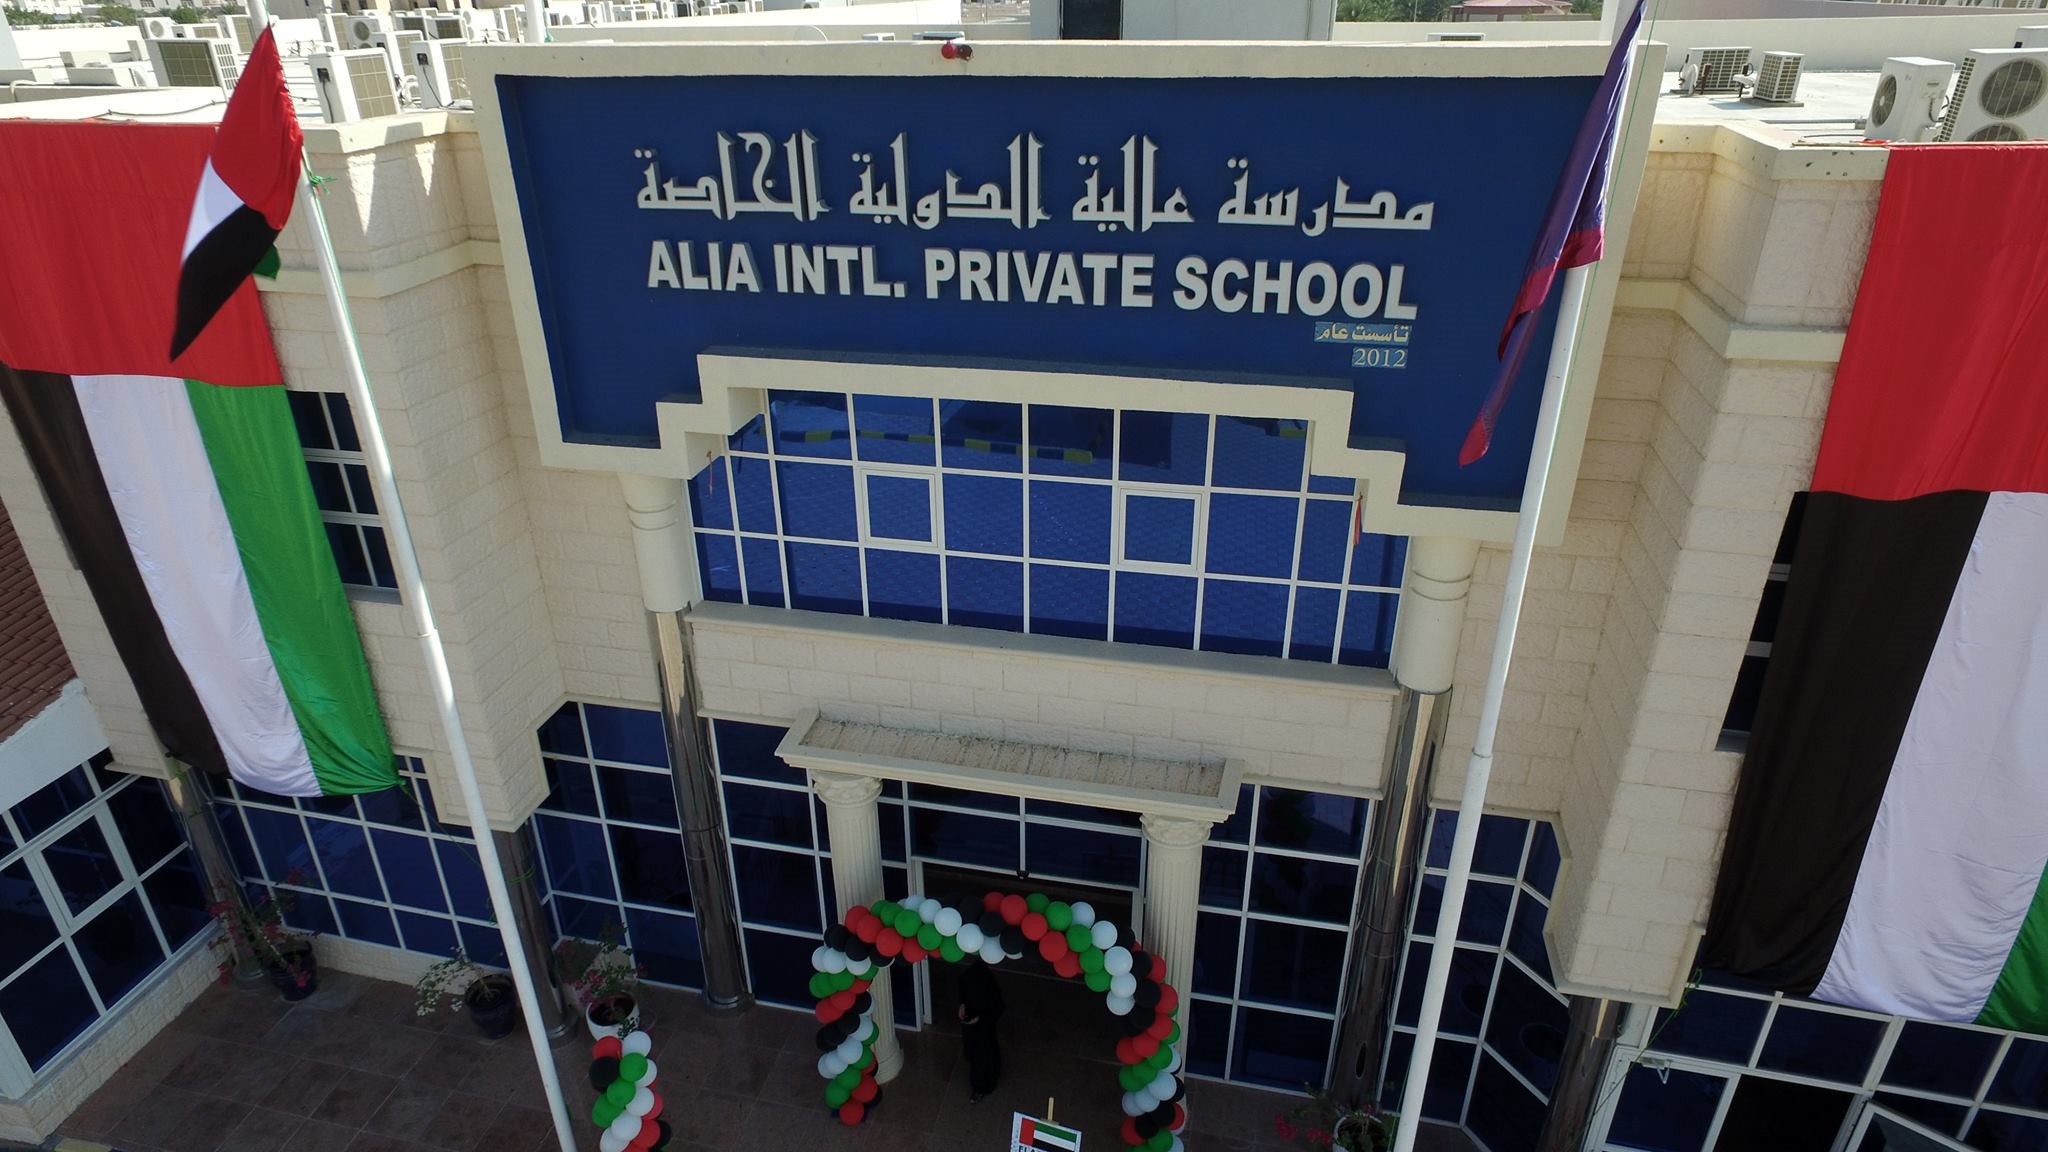 Alia National School